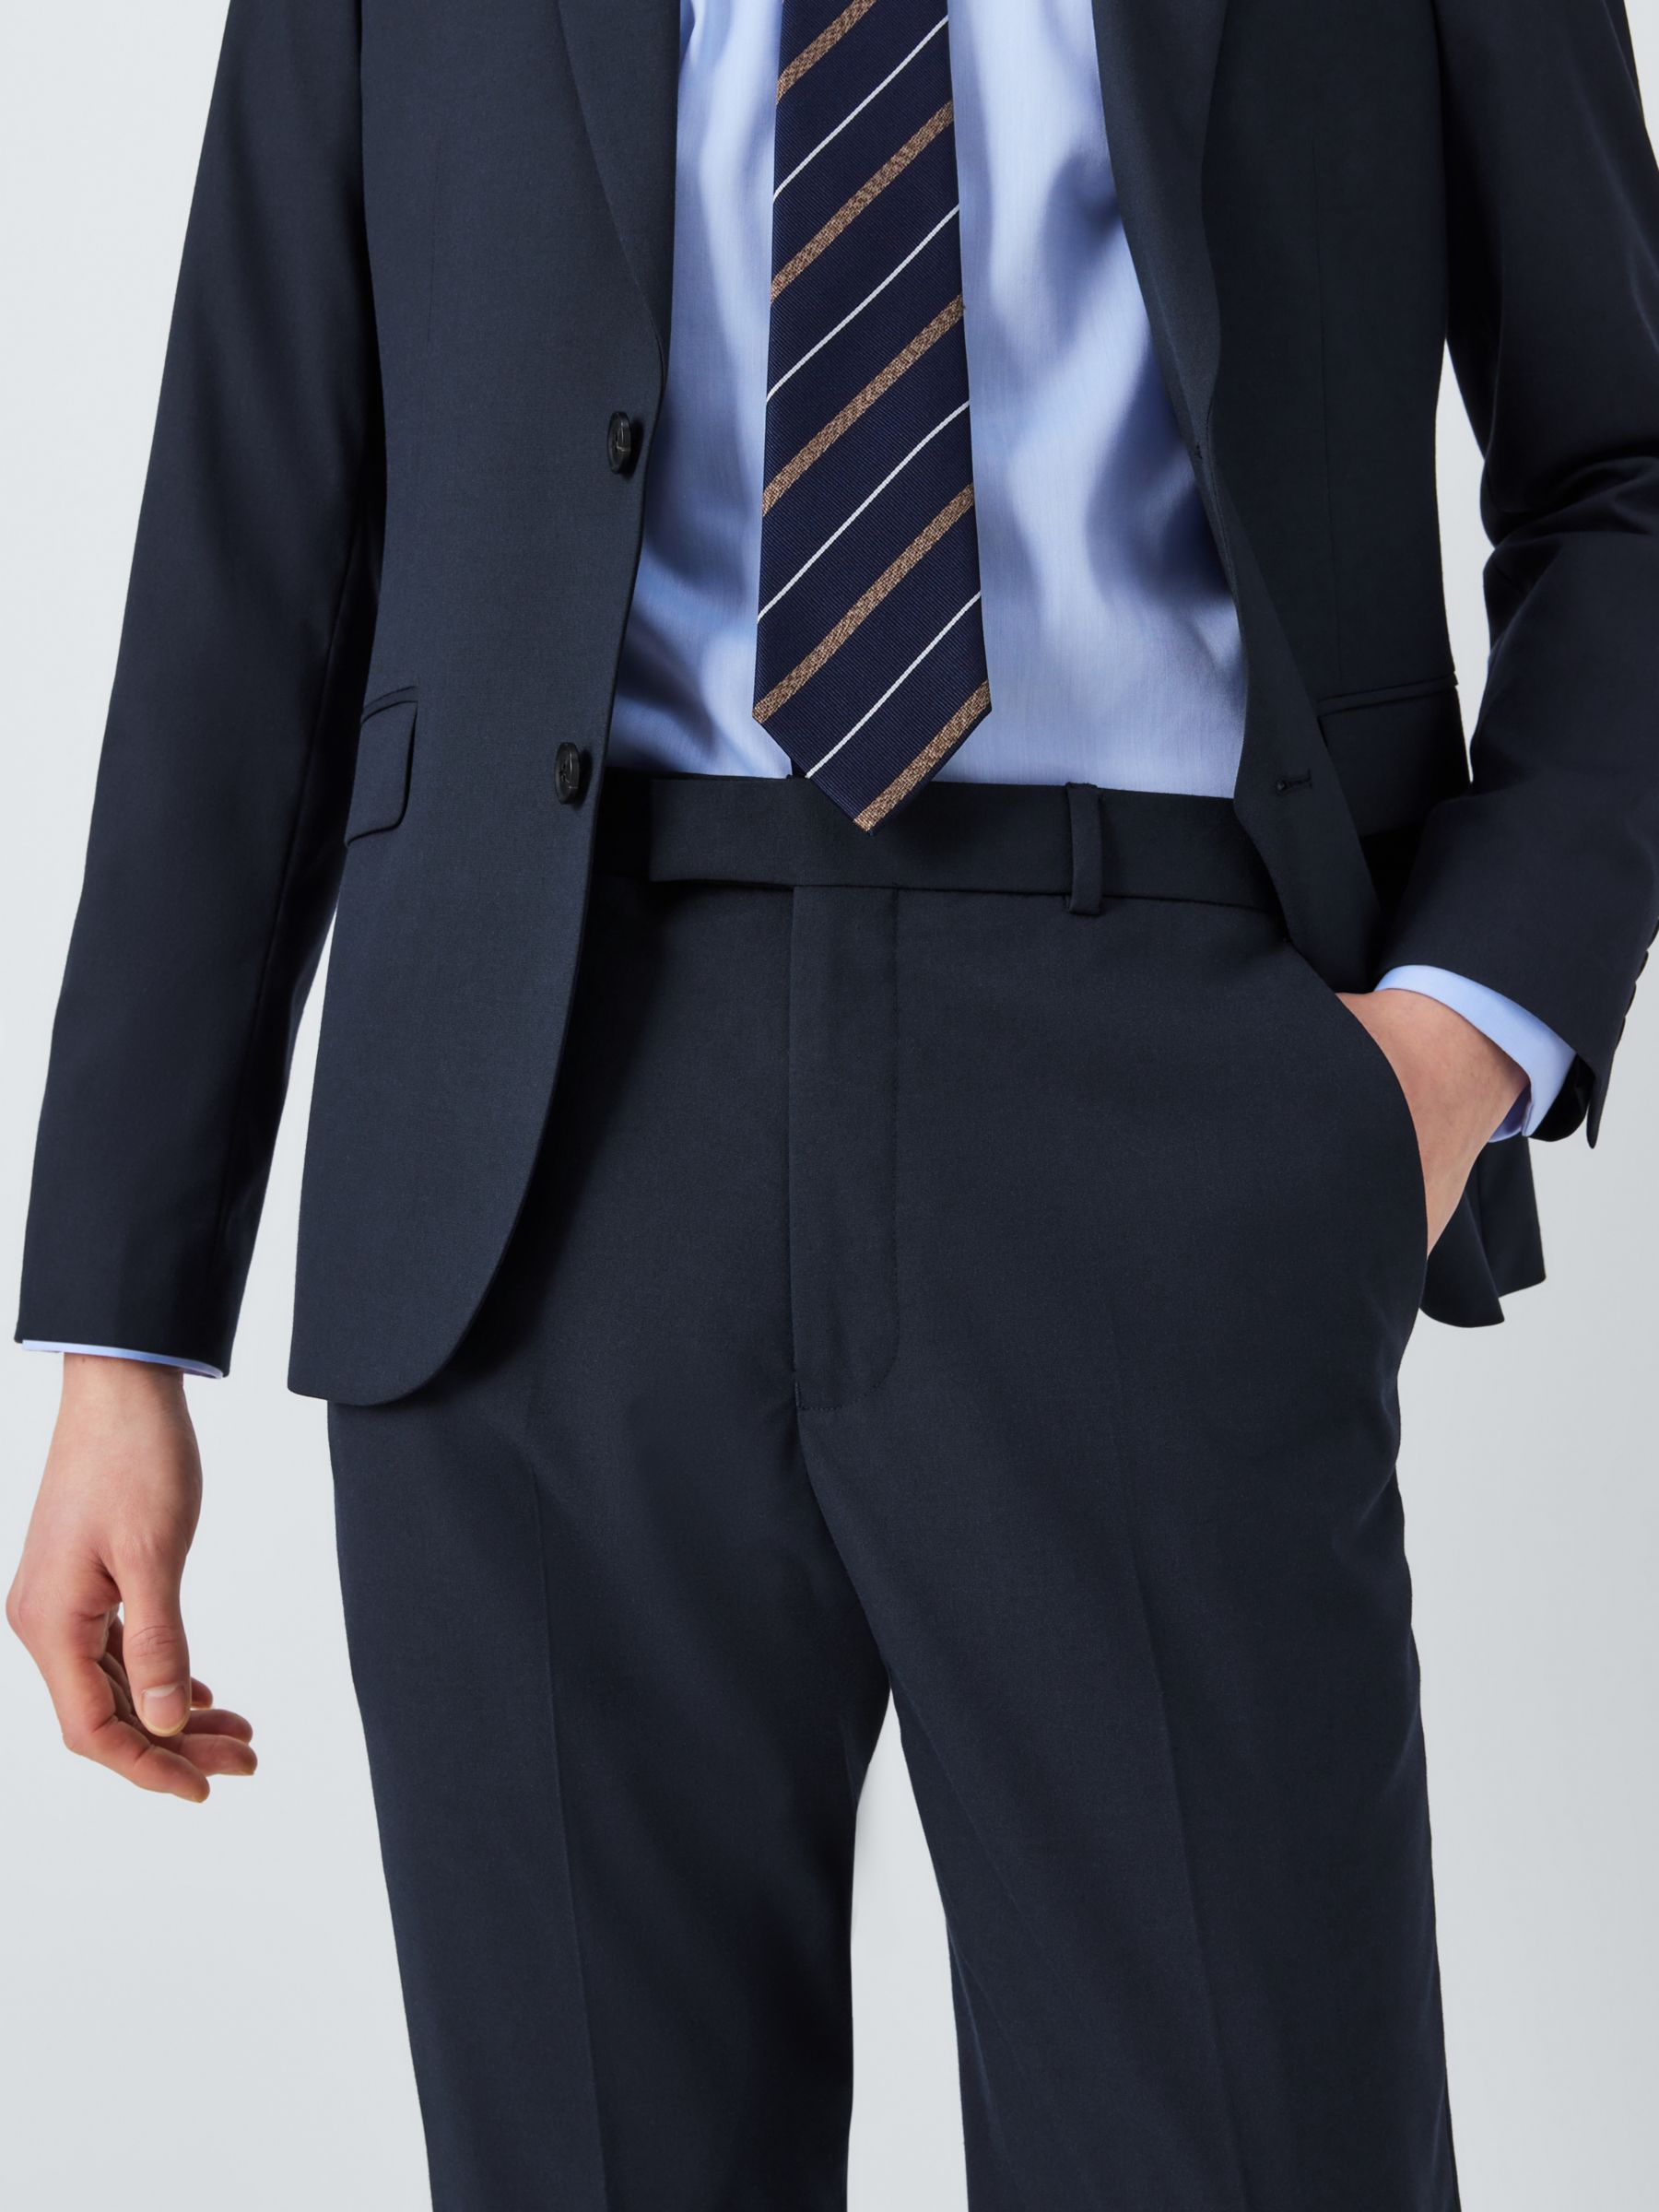 John Lewis Slim Fit Starter Suit Trousers, Navy, 30R